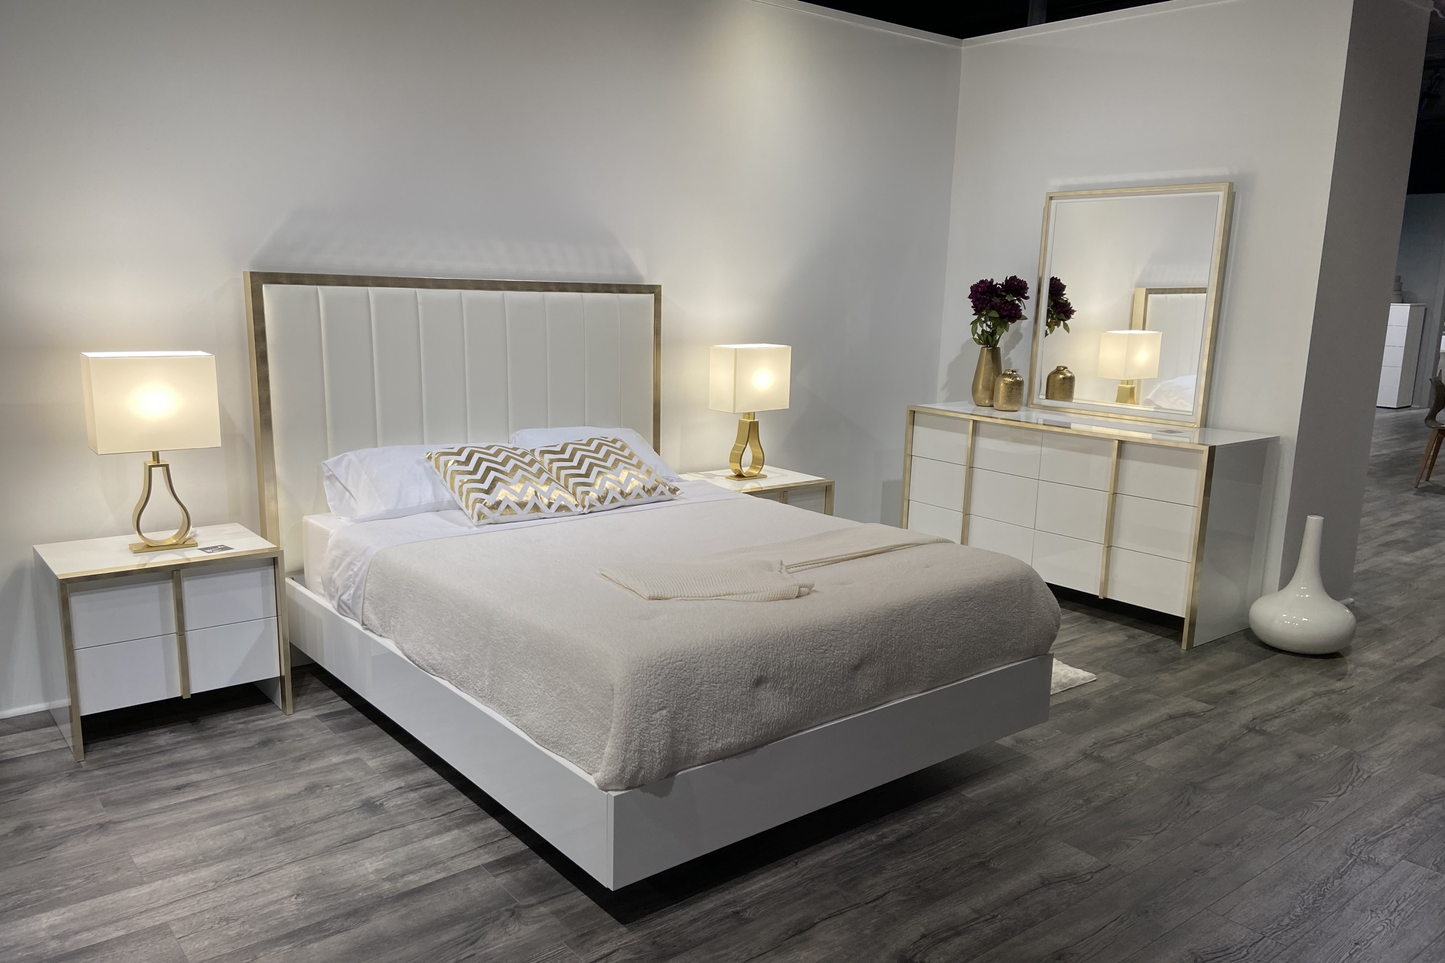 Fiocco Premium Bedroom Bed SKU: 17454